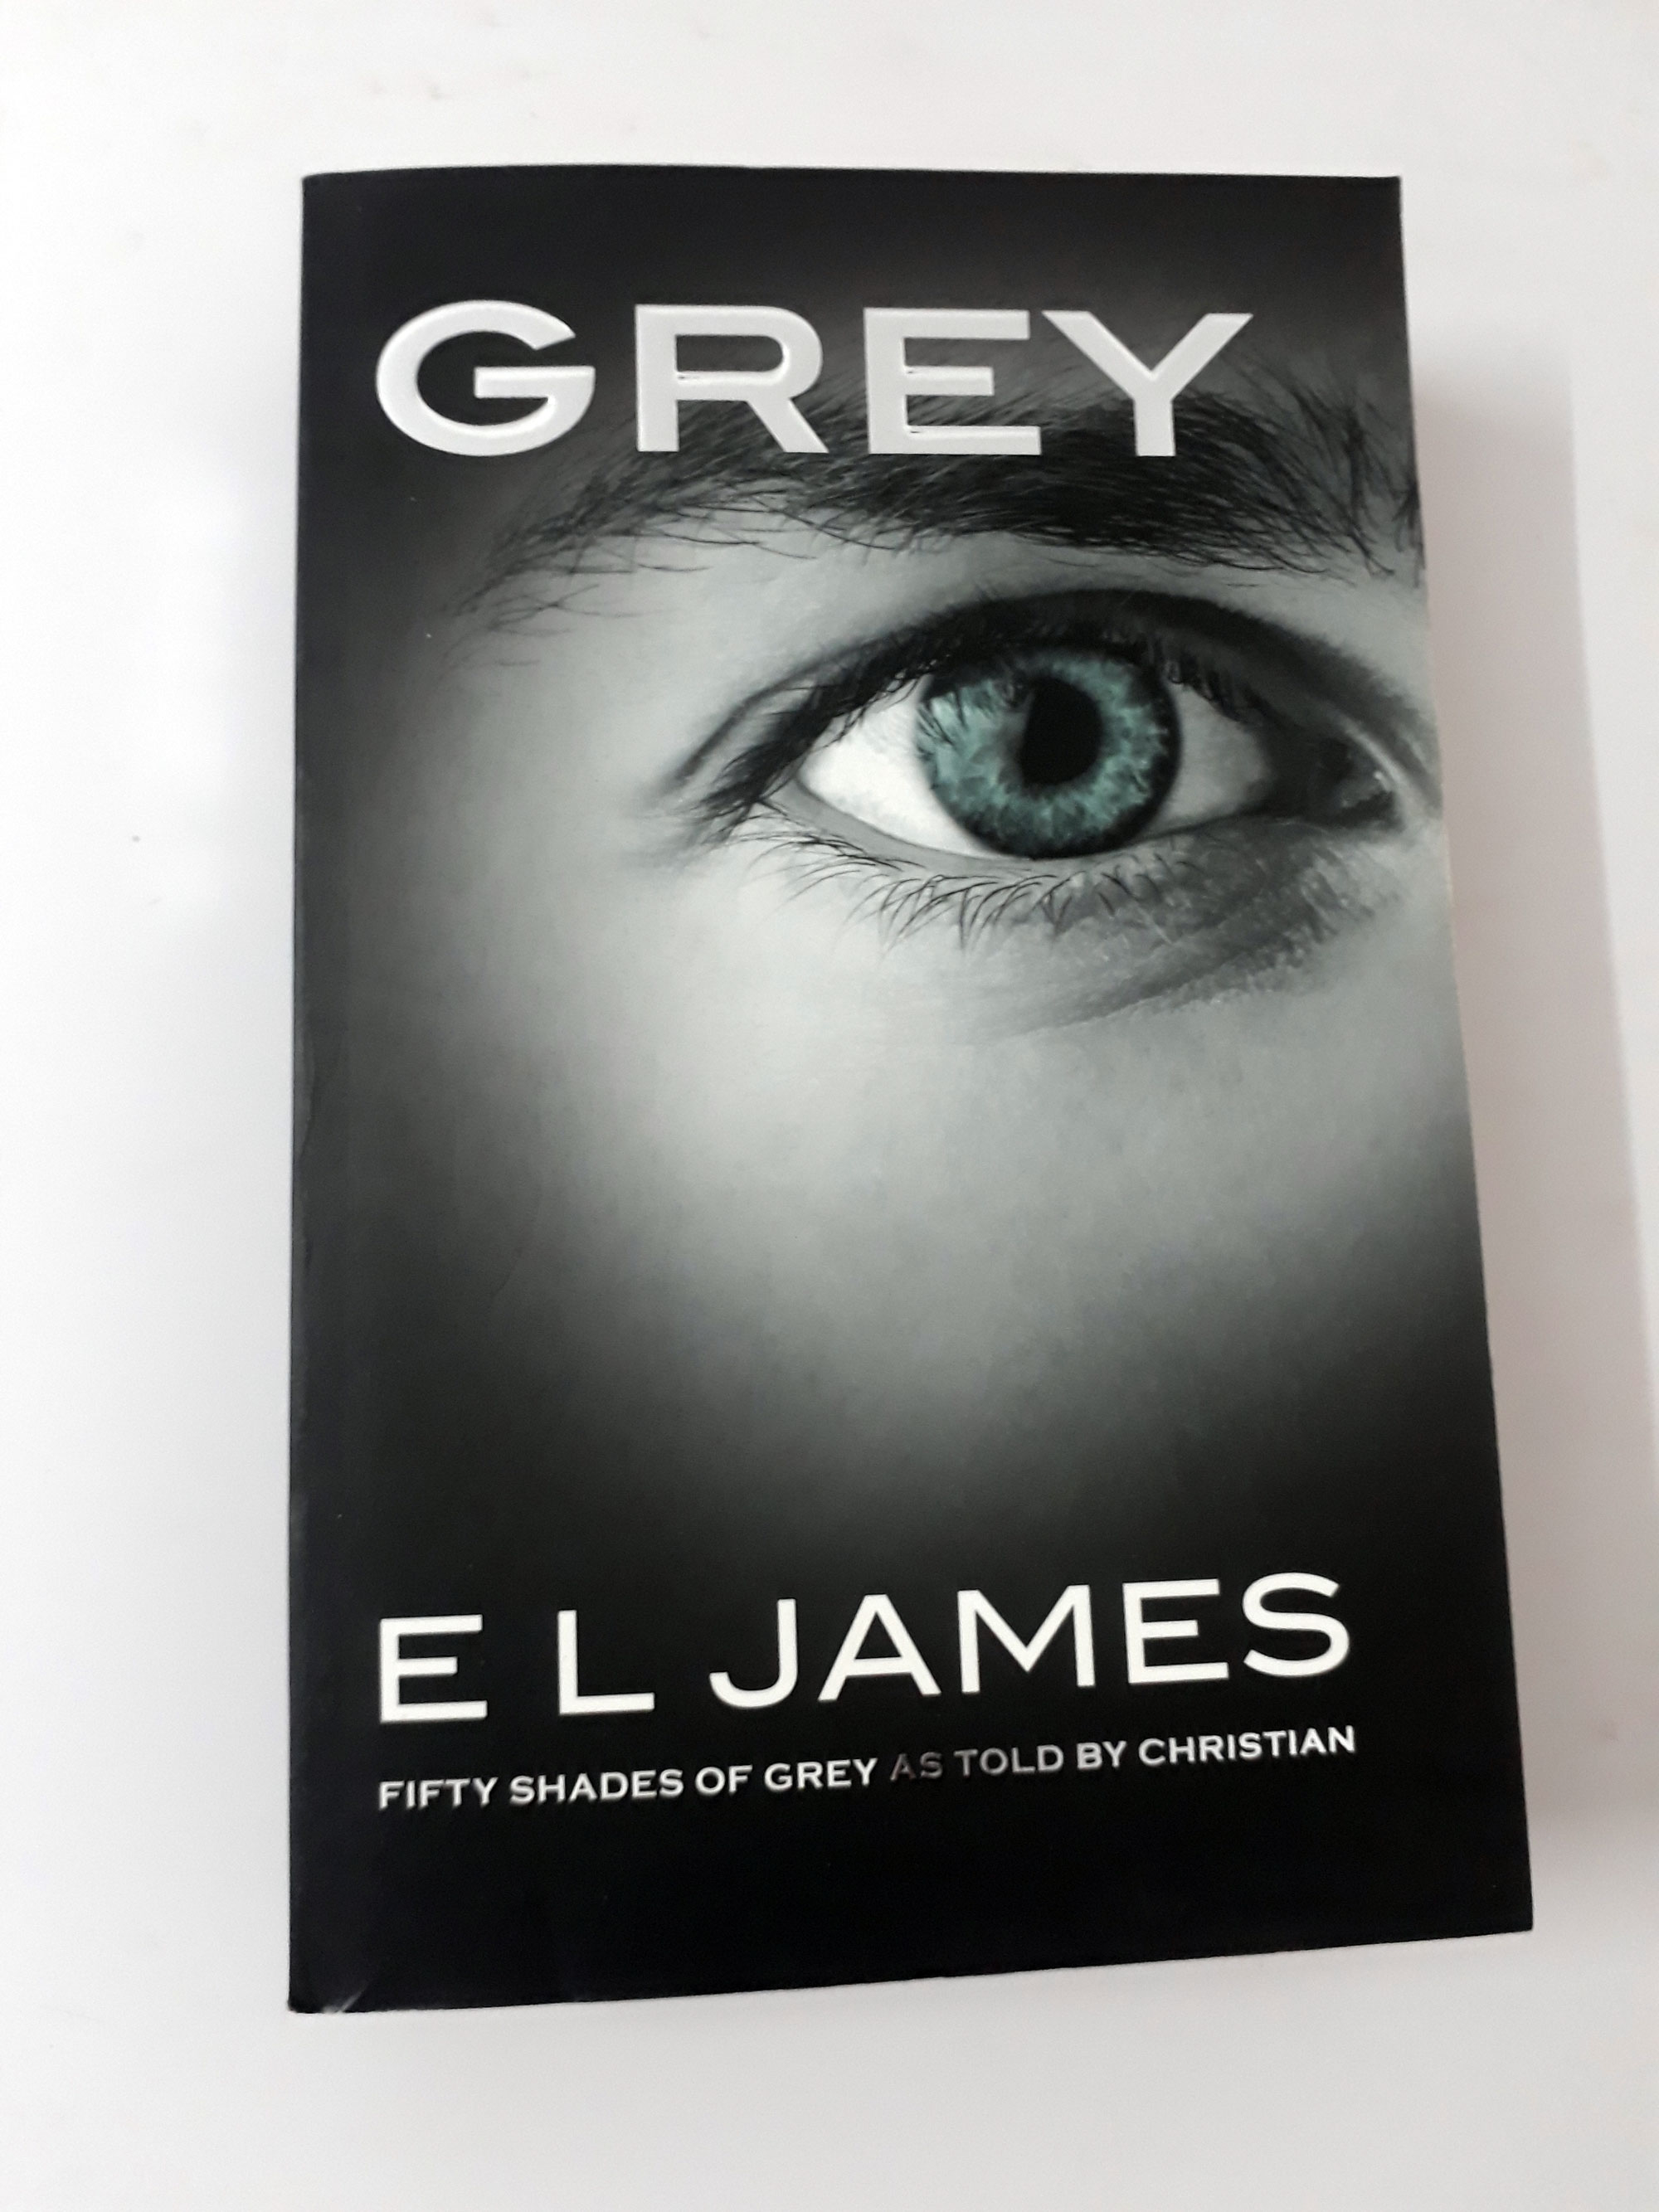 book series like 50 shades of grey